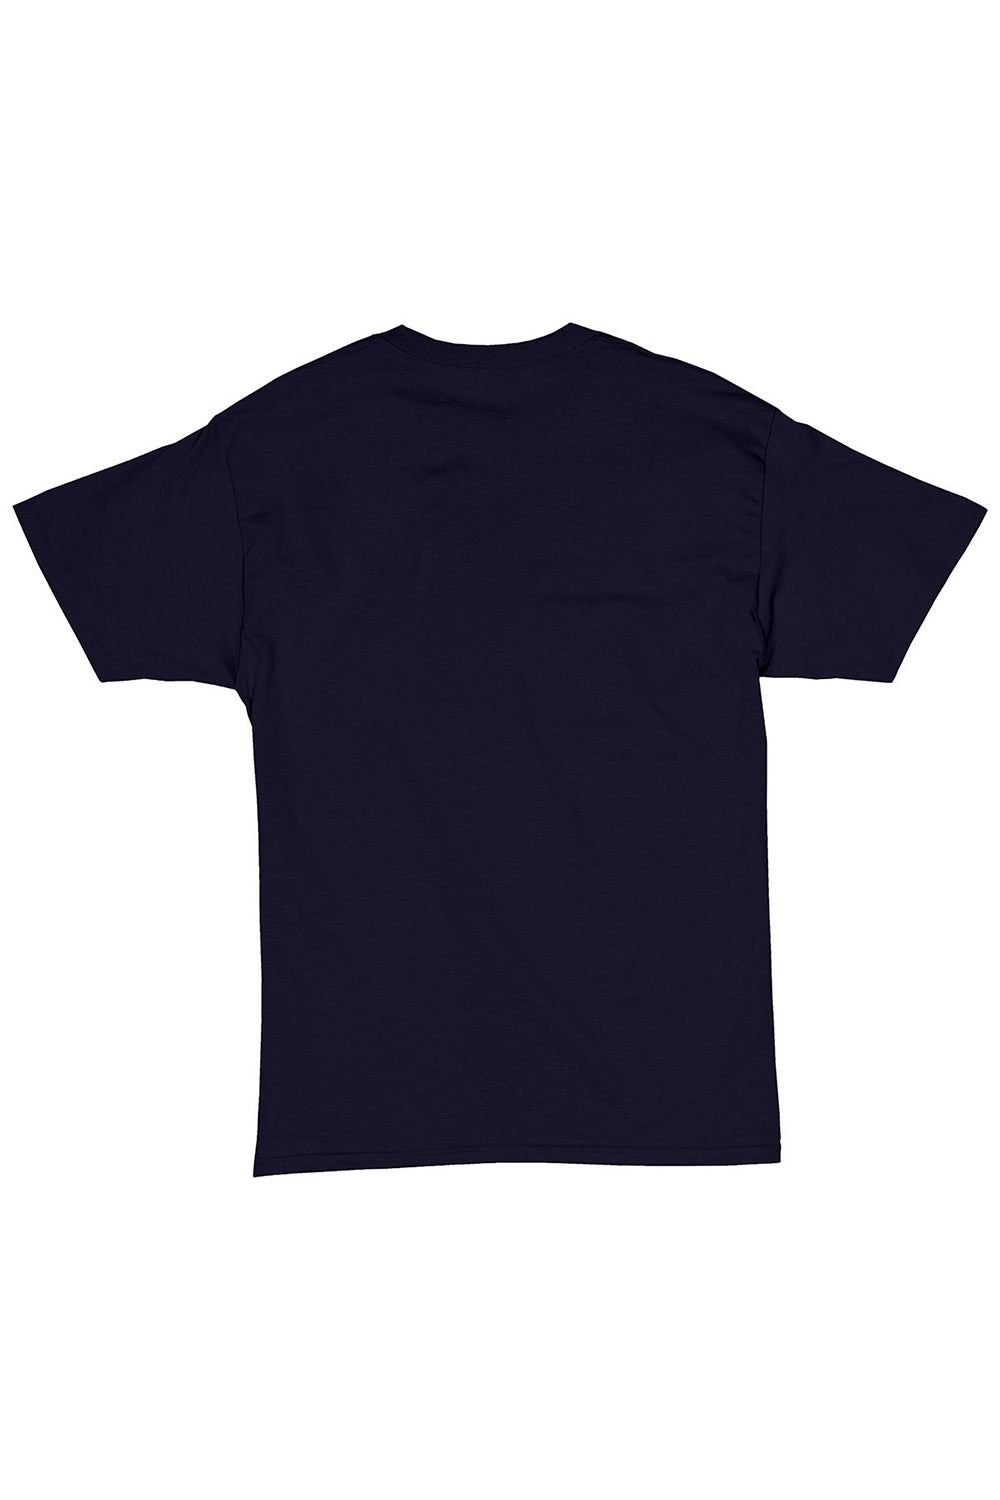 Hanes 5280 Mens ComfortSoft Short Sleeve Crewneck T-Shirt Athletic Navy Blue Flat Back